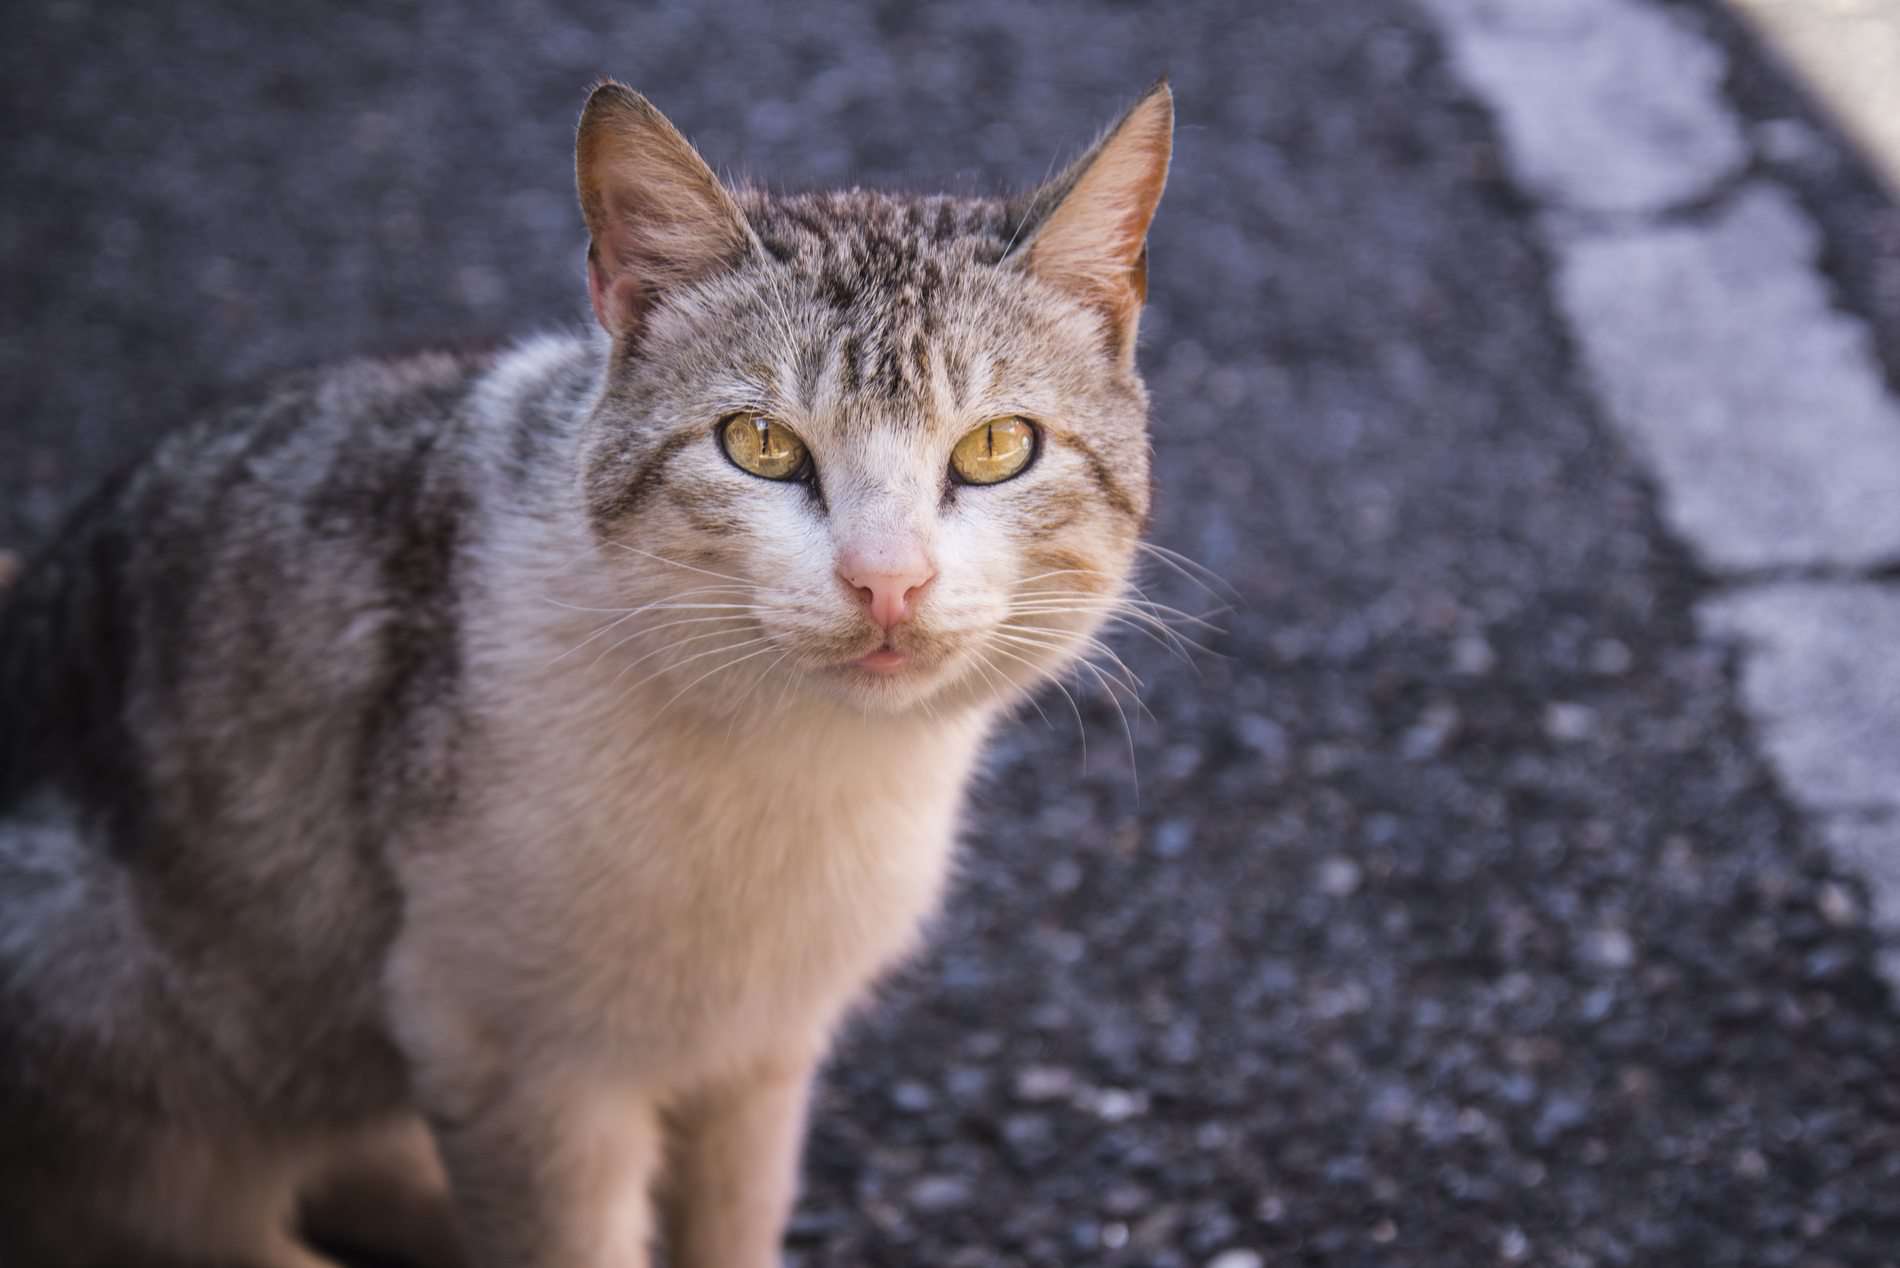 Genre jeans Bering strædet Herreløse katte i danmark